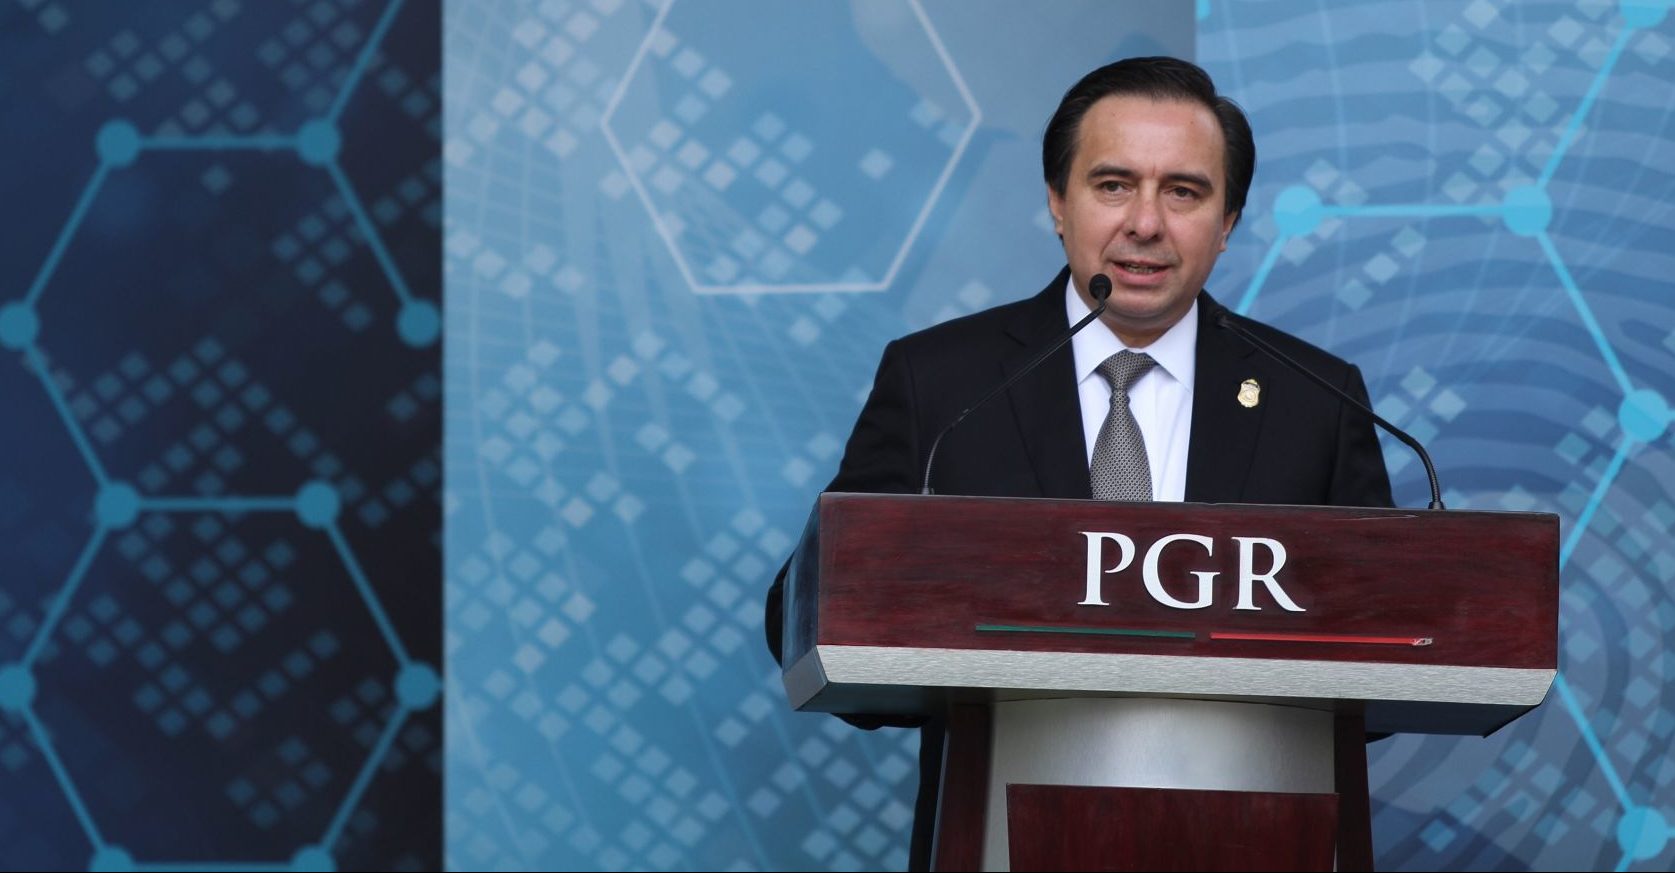 Thomas Zerón stole more than a billion pesos from the PGR: Gertz Manero